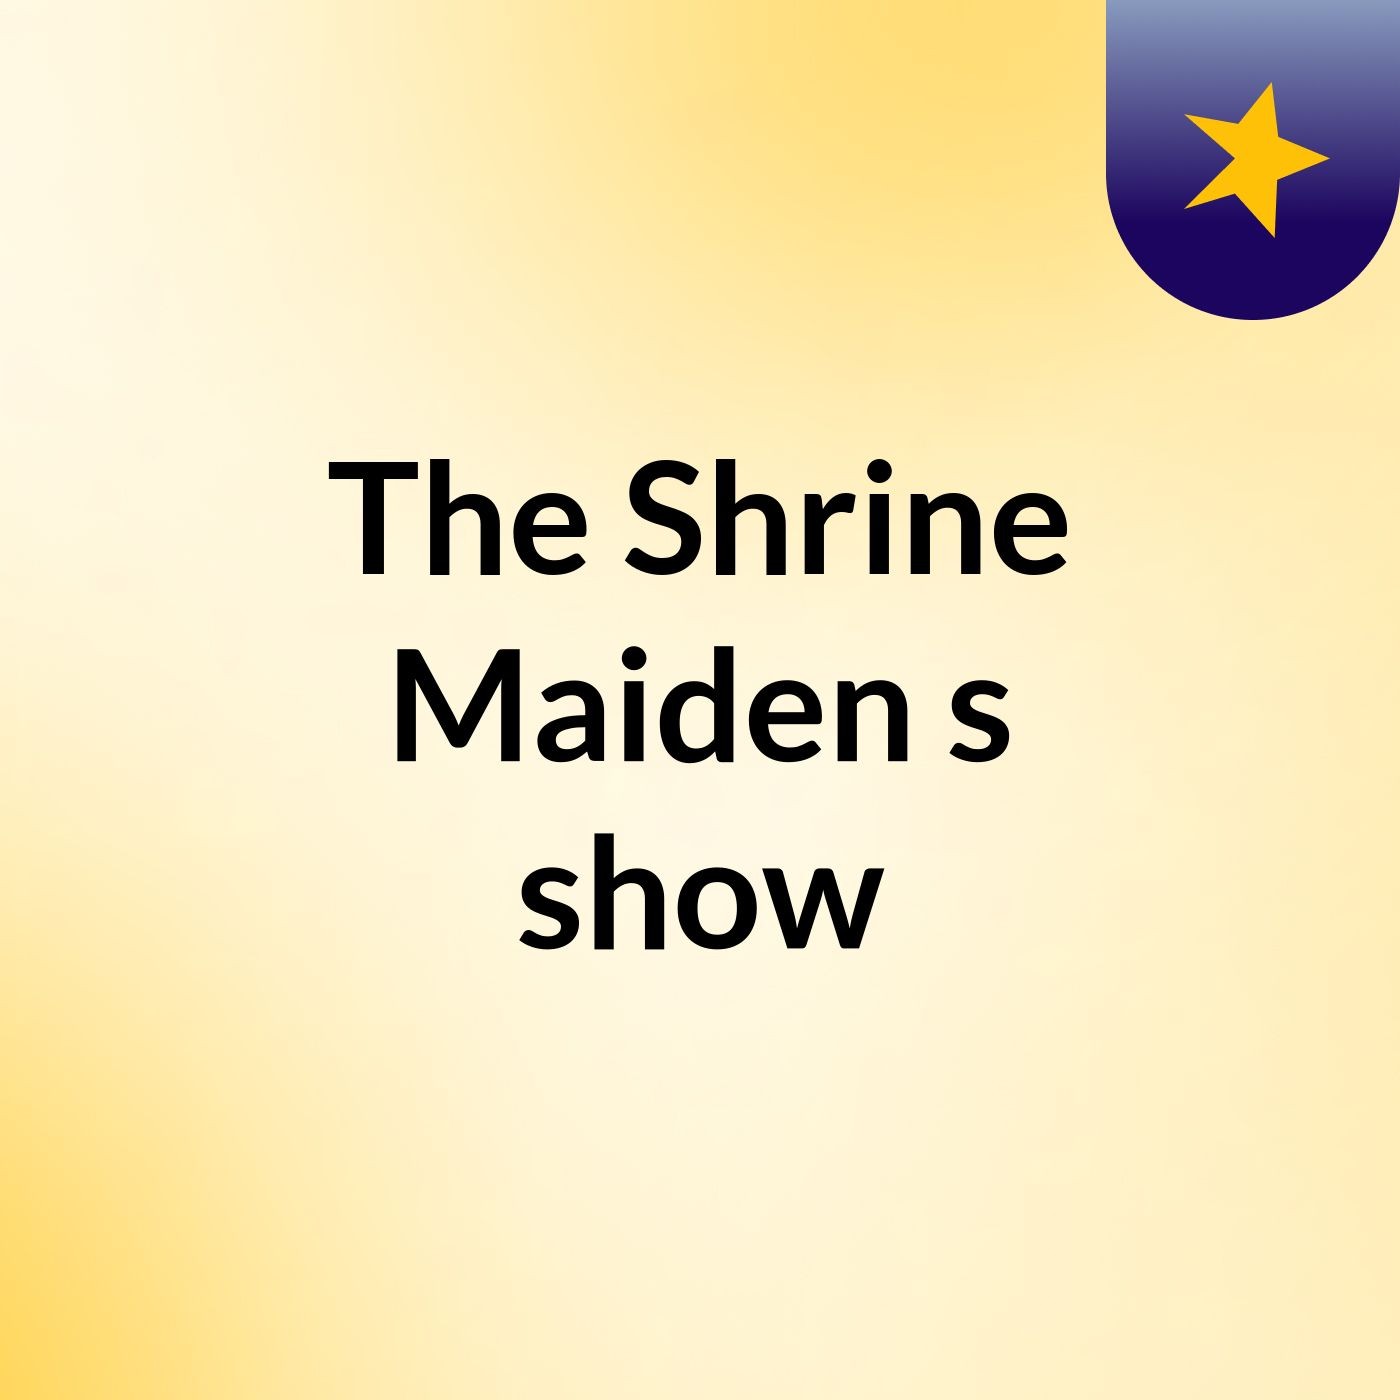 The Shrine Maiden's show